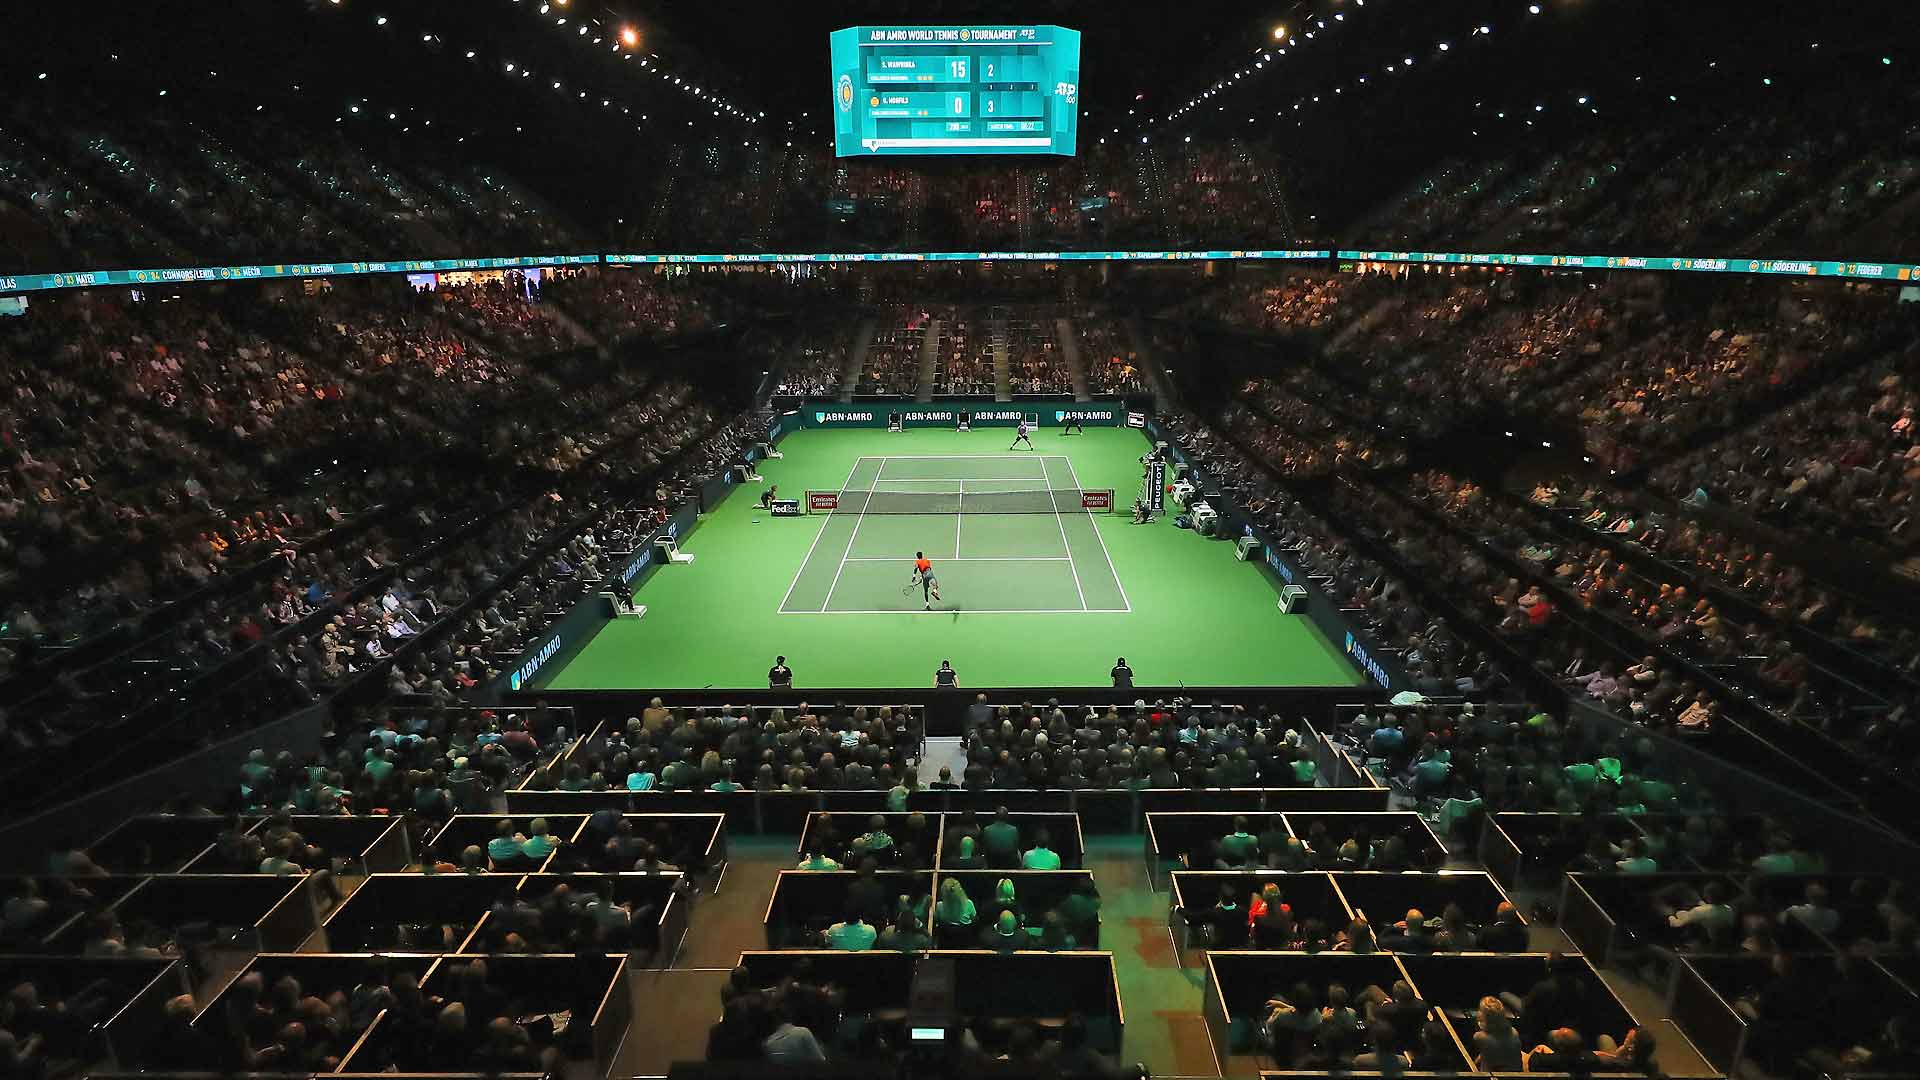 Rotterdam Open 